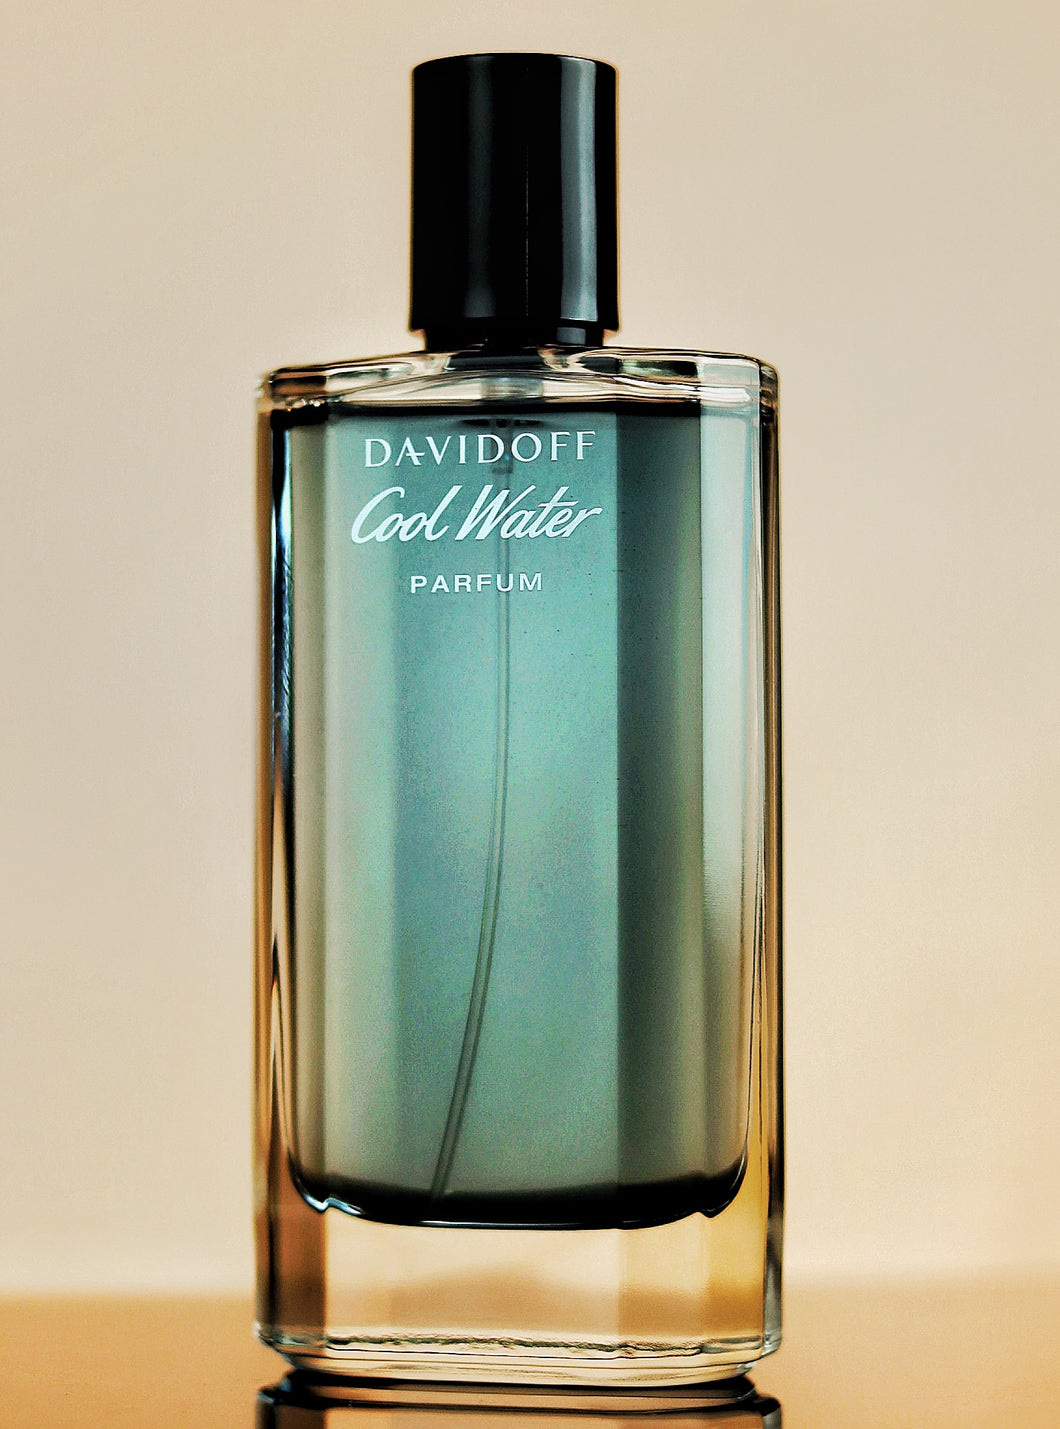 Davidoff Cool Water Parfum, Fragrance Sample